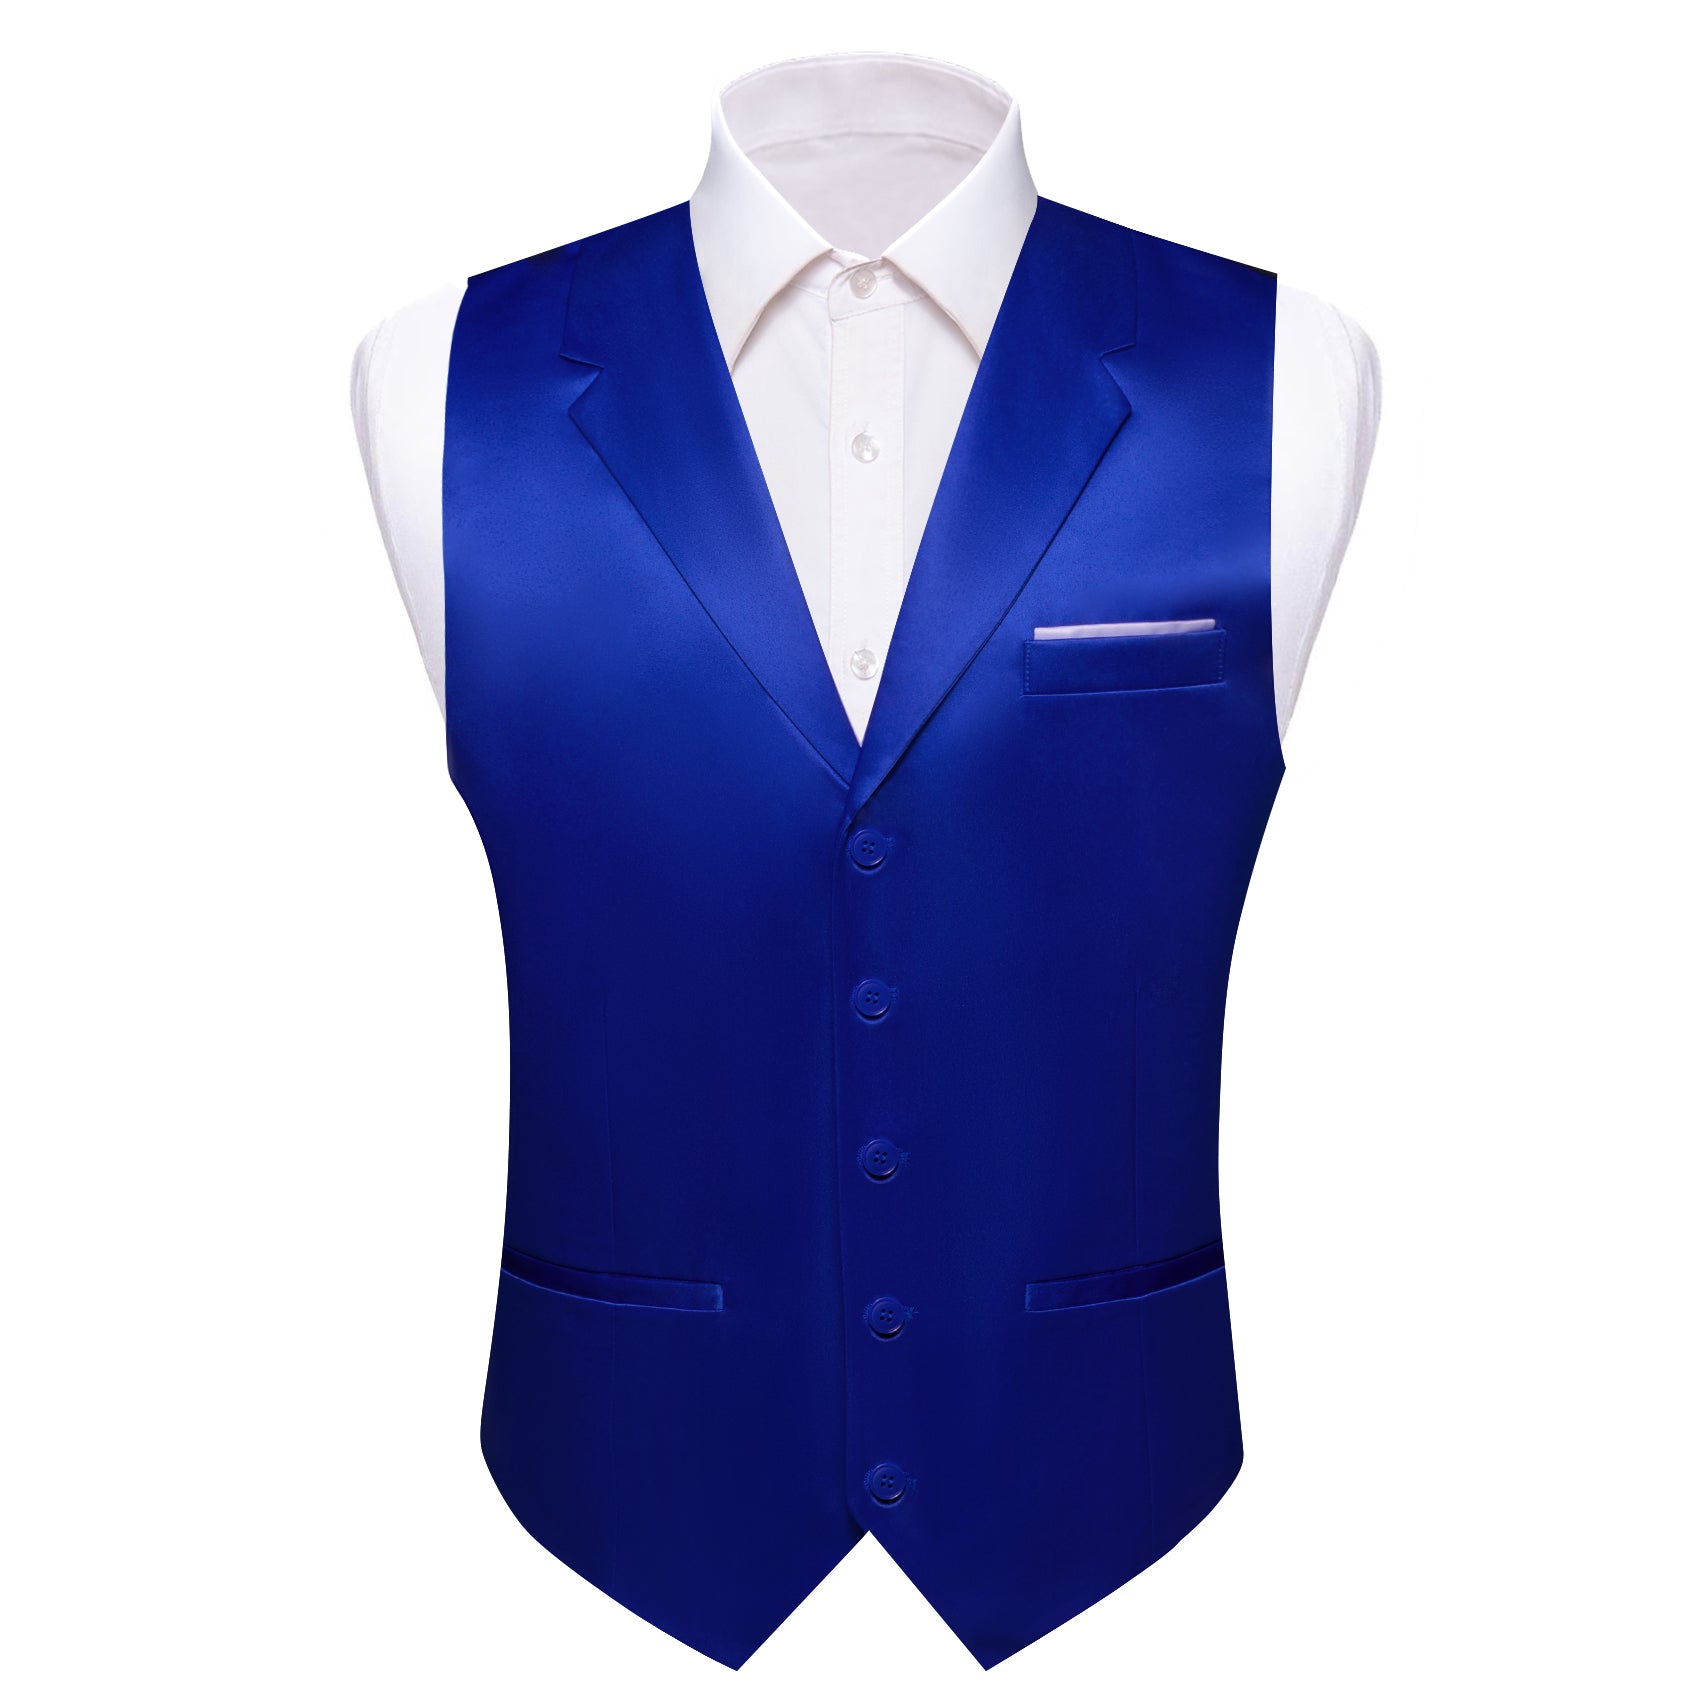 Barry.wang Cobalt Blue Solid Vest Waistcoat Set